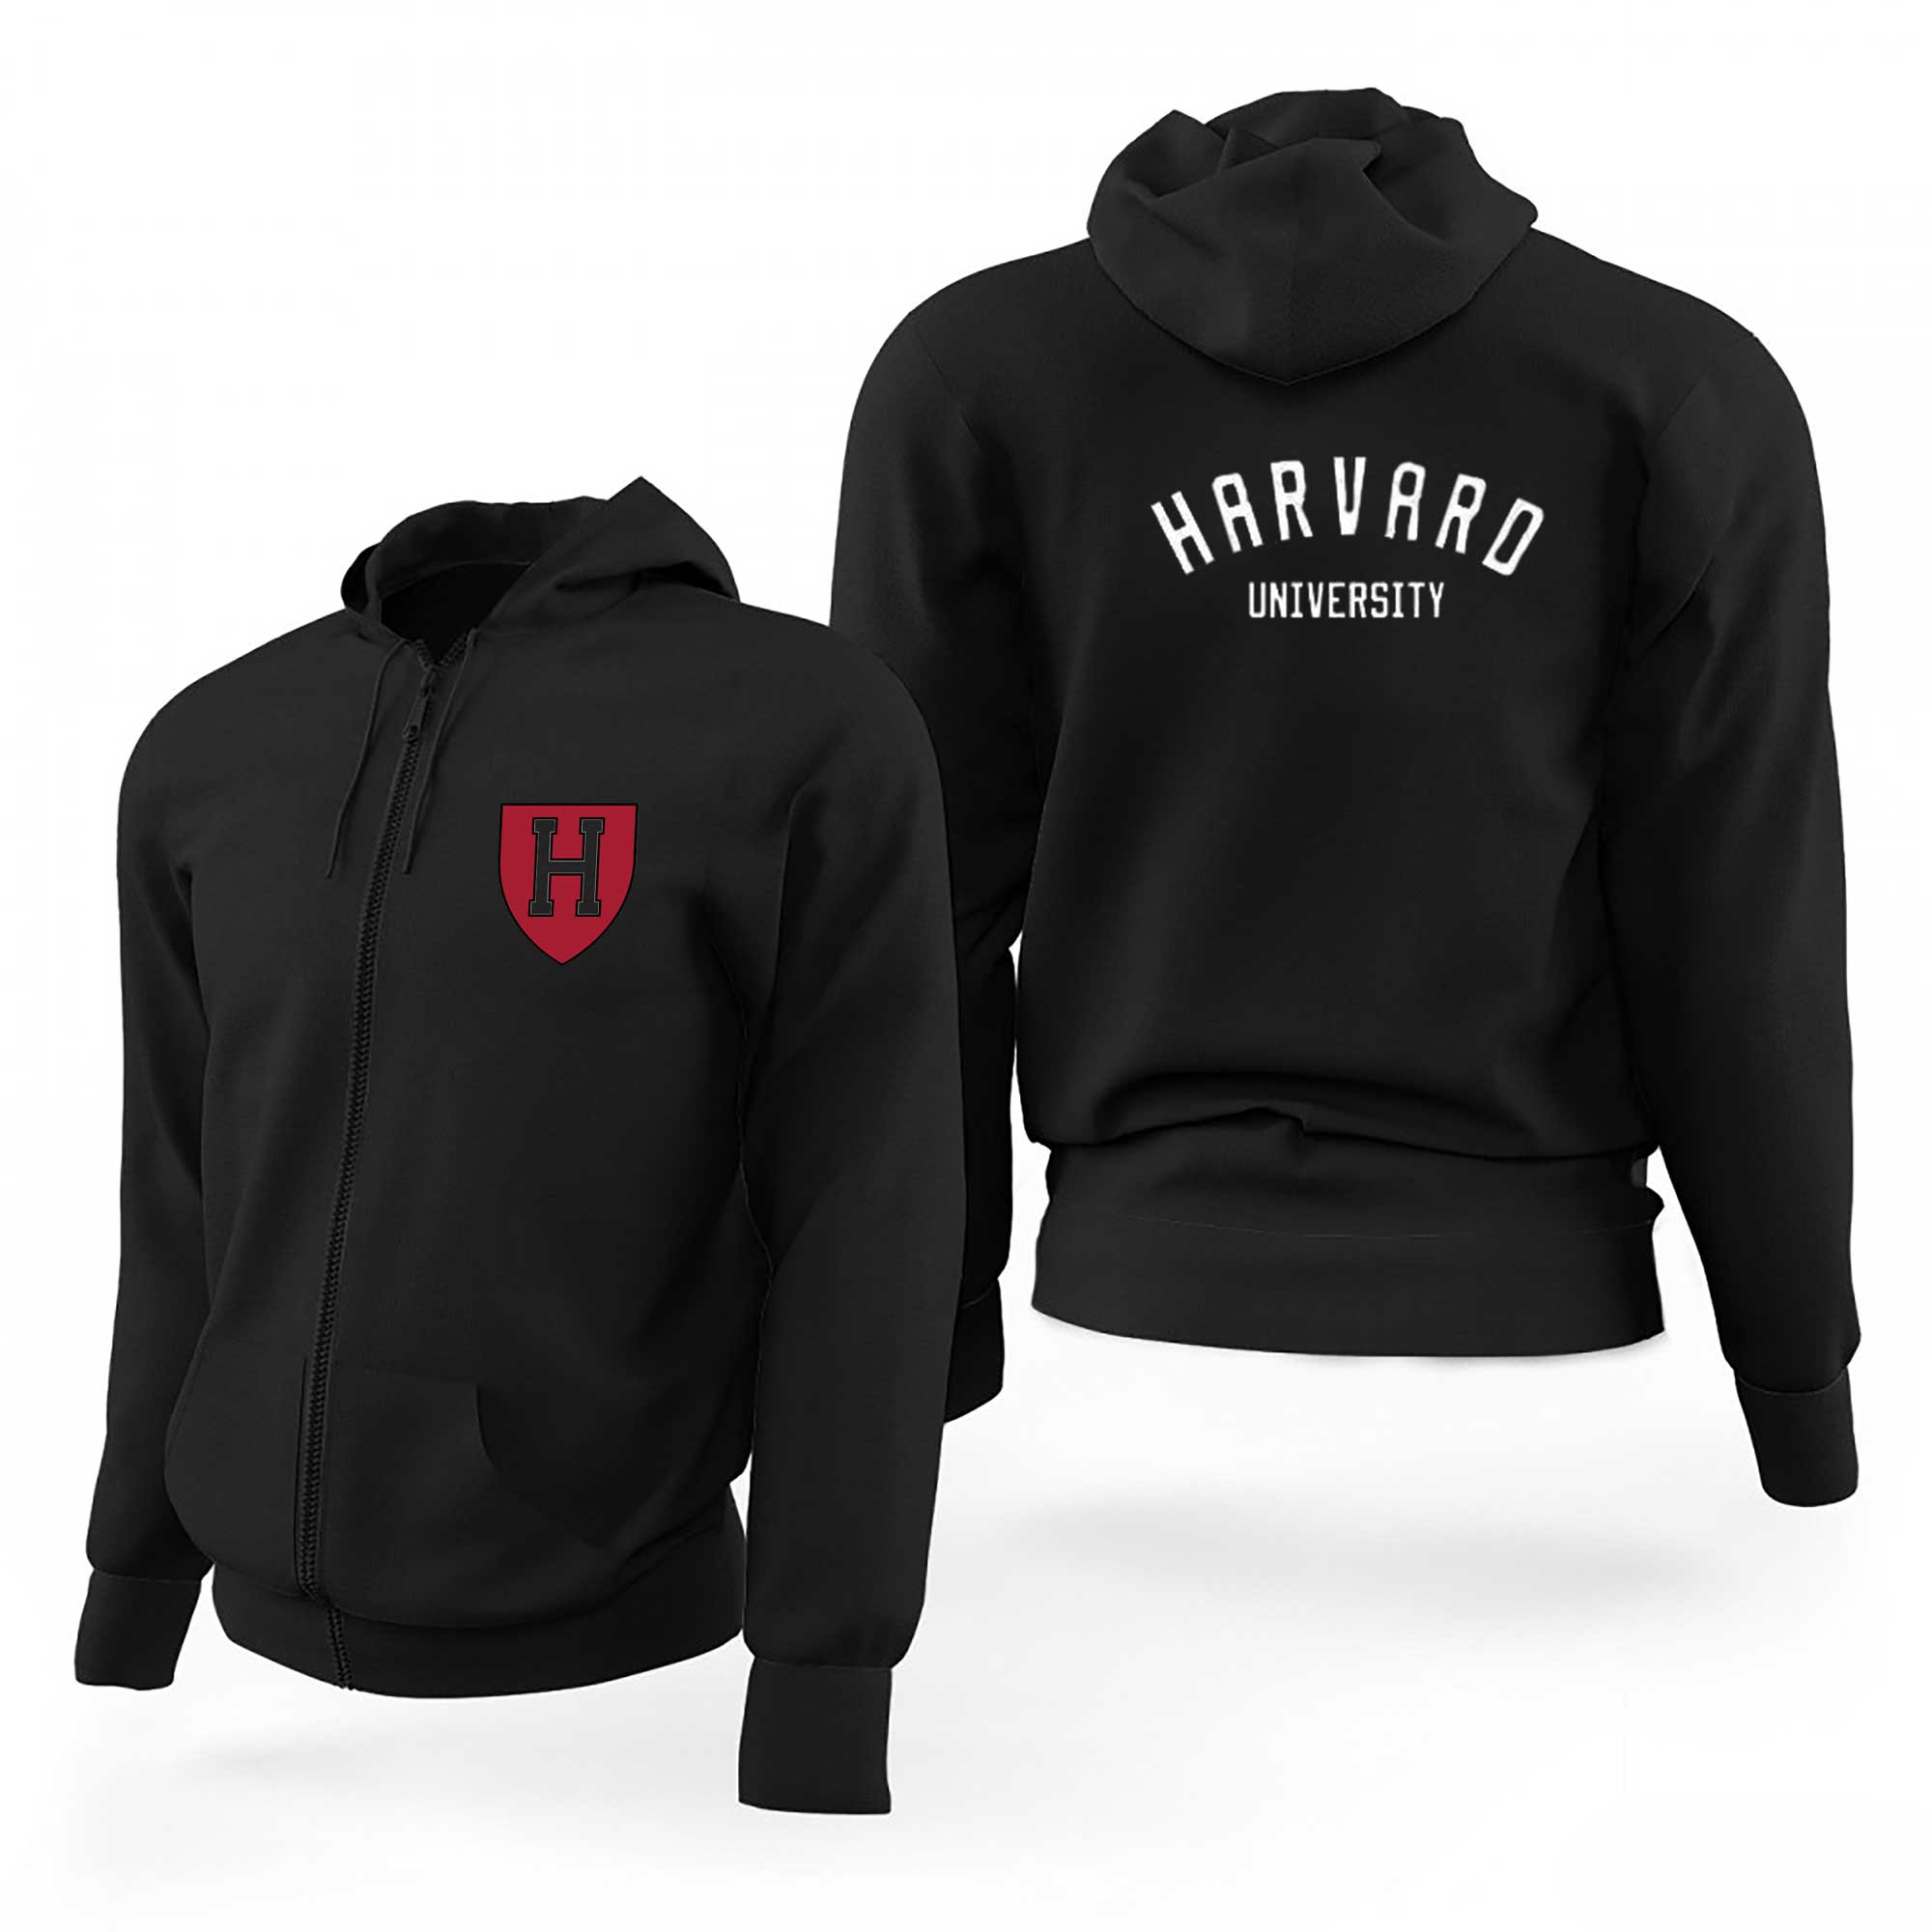 Harvard University Siyah Fermuarlı Limited Edition Kapşonlu Sweatshirt